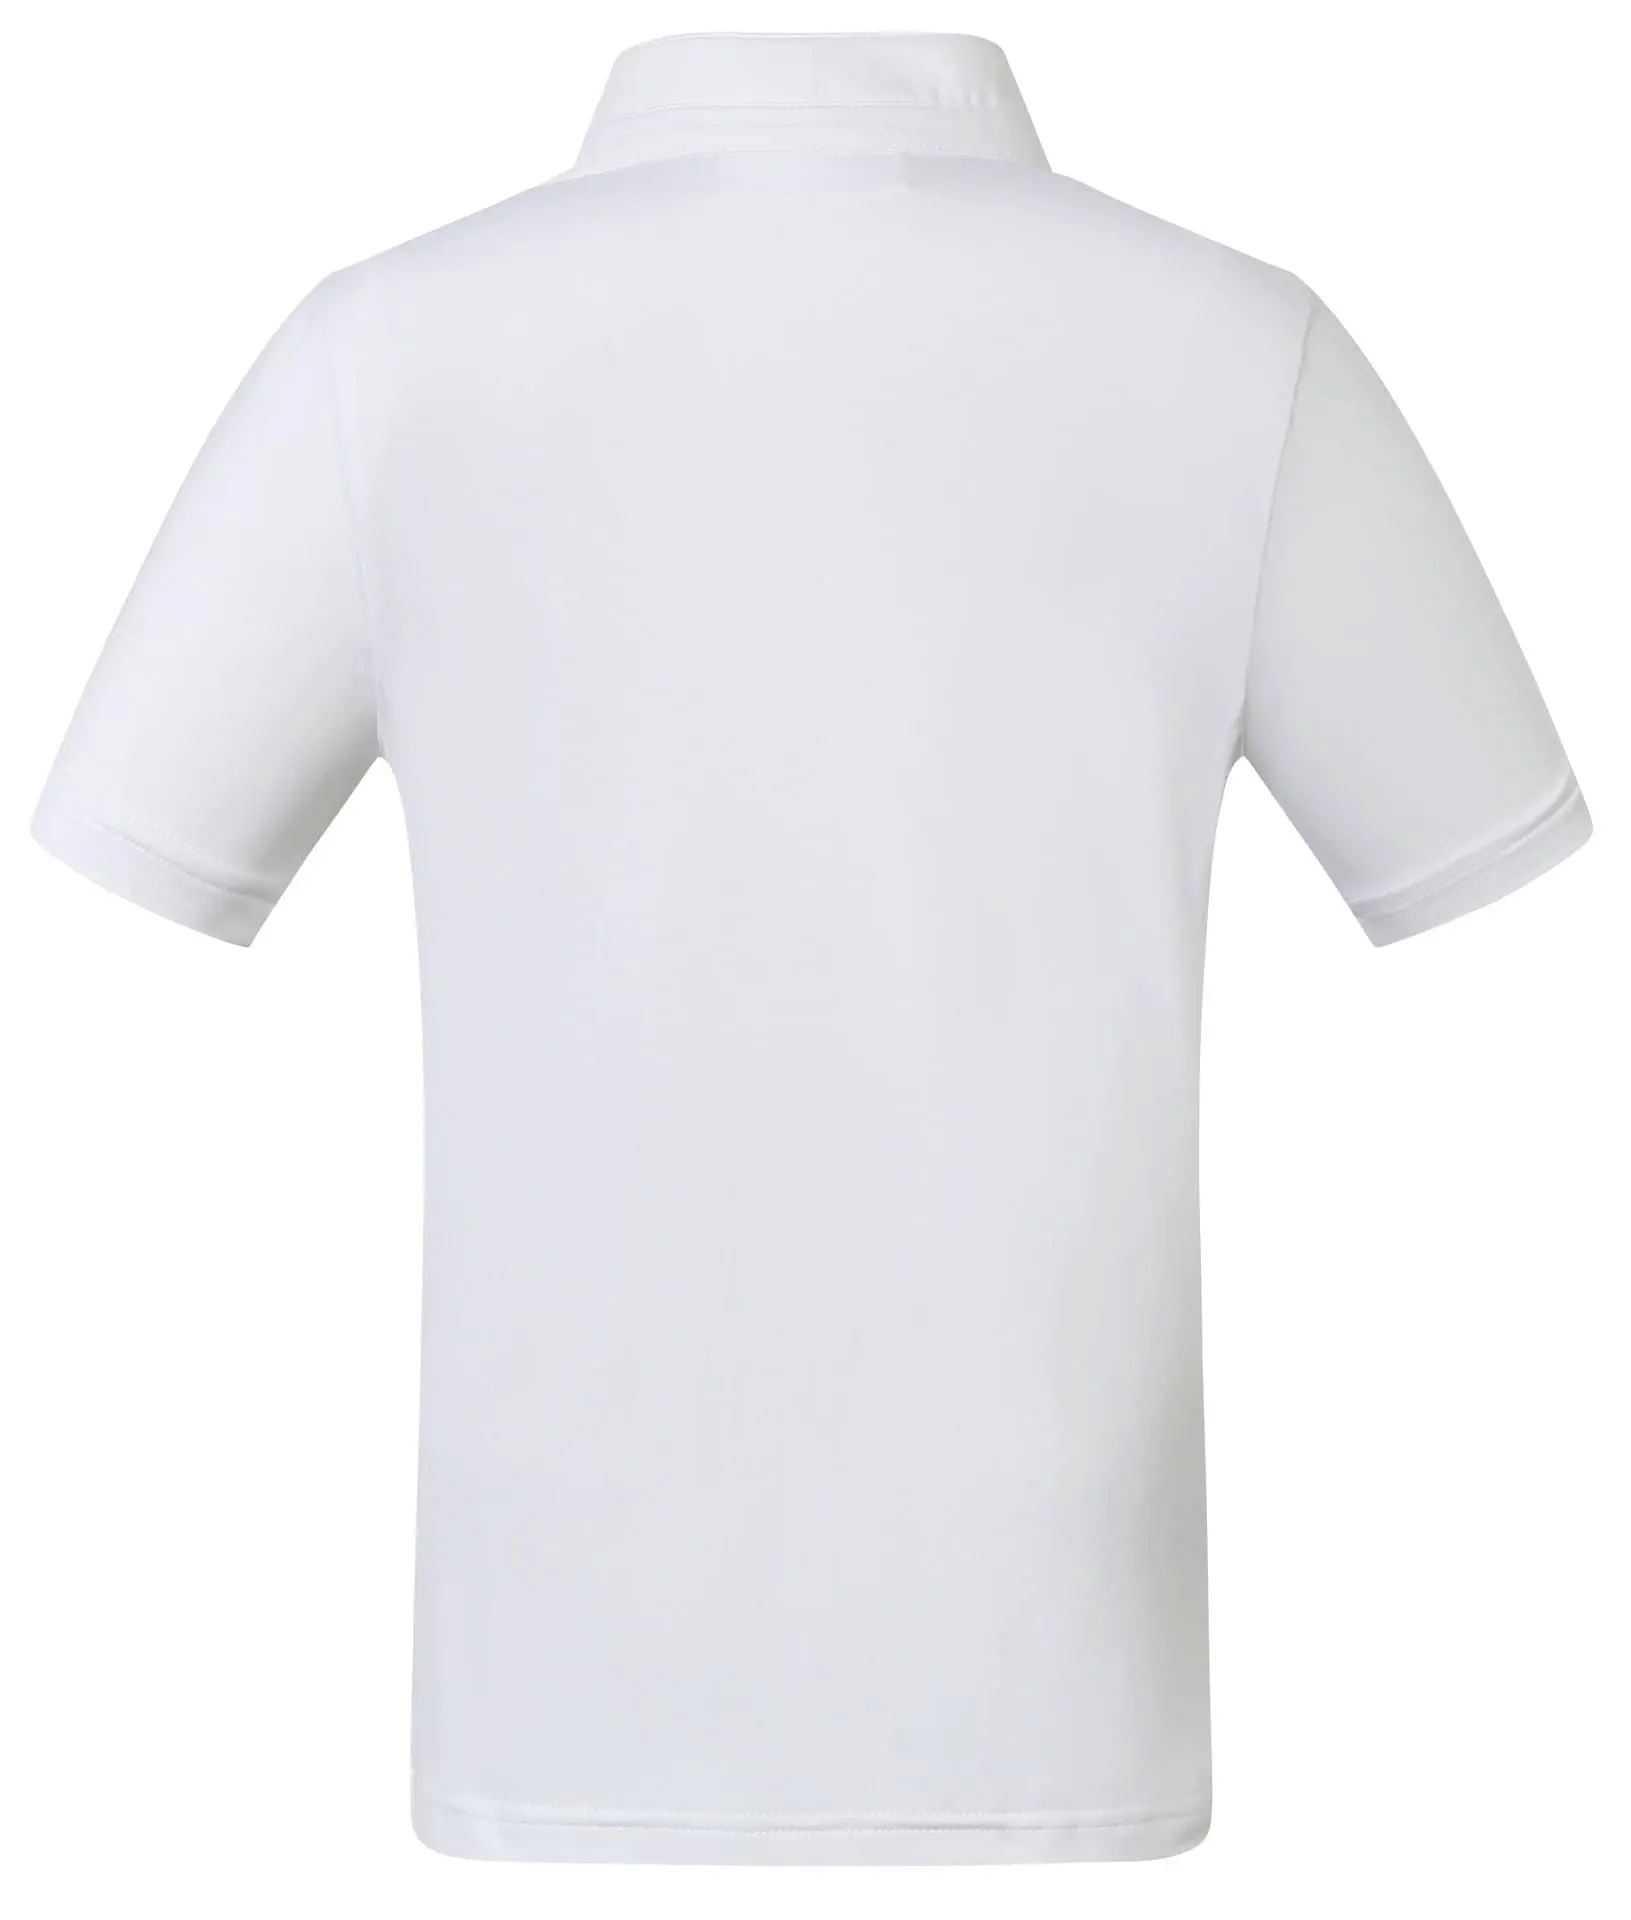 Competition Shirt Goldana Kinder, white, 140/146